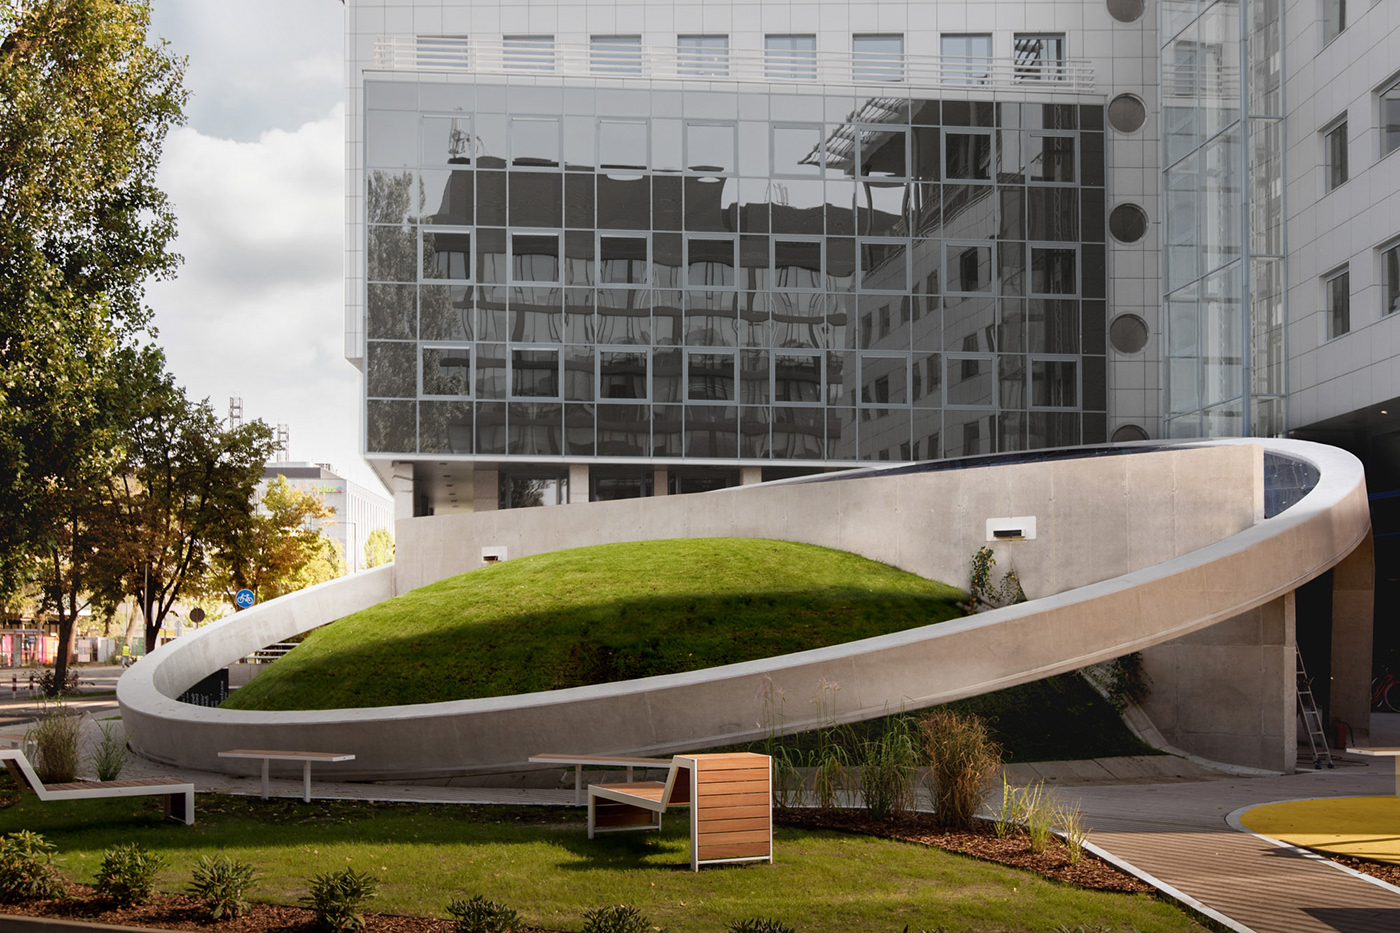 amphitheatre concrete cultural Landscape mode:lina modelina architekci Office poland warsaw